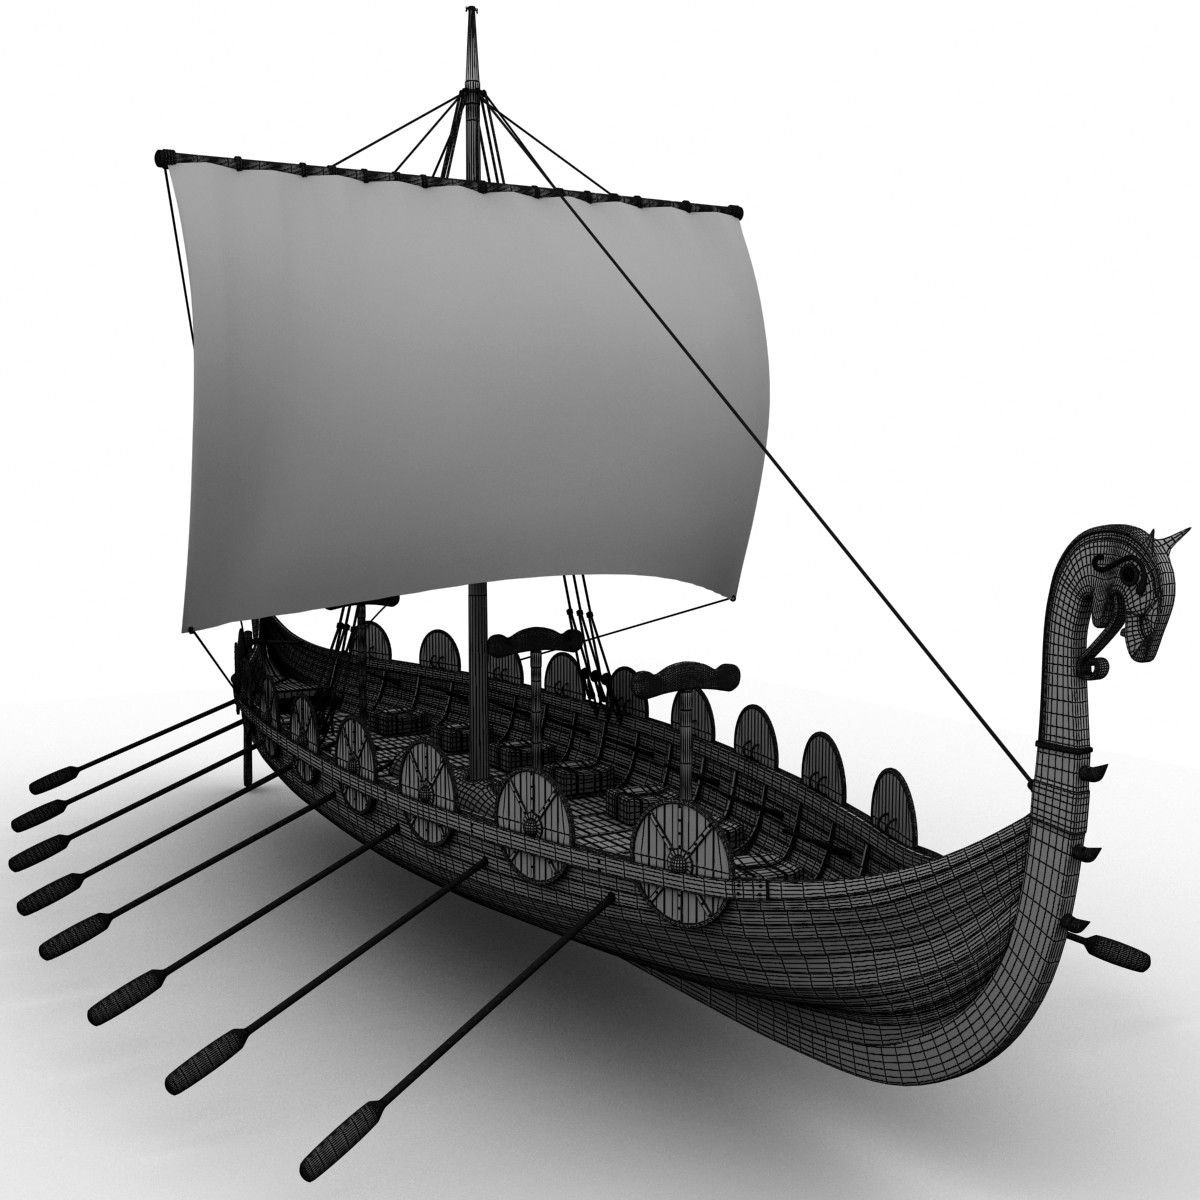 Три ладьи. Ладья Драккар викингов. Модель корабля Viking ship (корабль викингов). Ладья Драккар викингов каркас. Боевой корабль викингов Драккар.